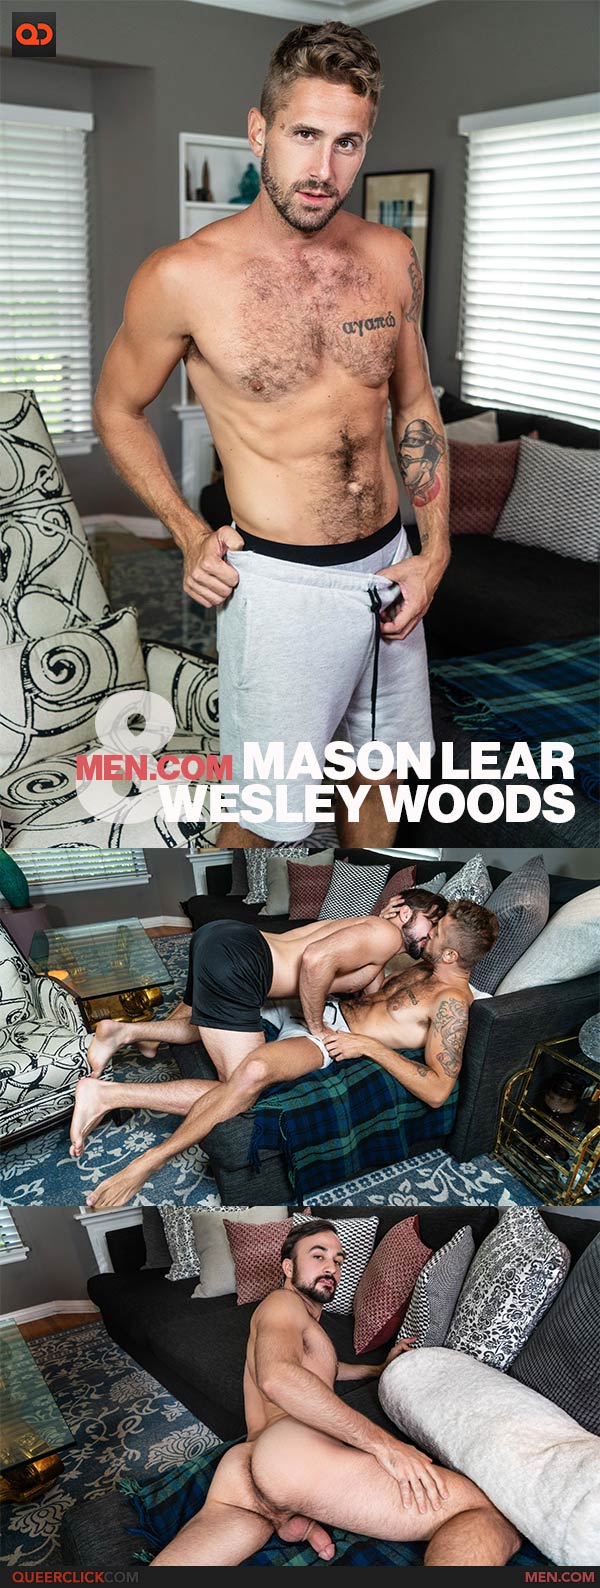 Men.com: Mason Lear and Wesley Woods